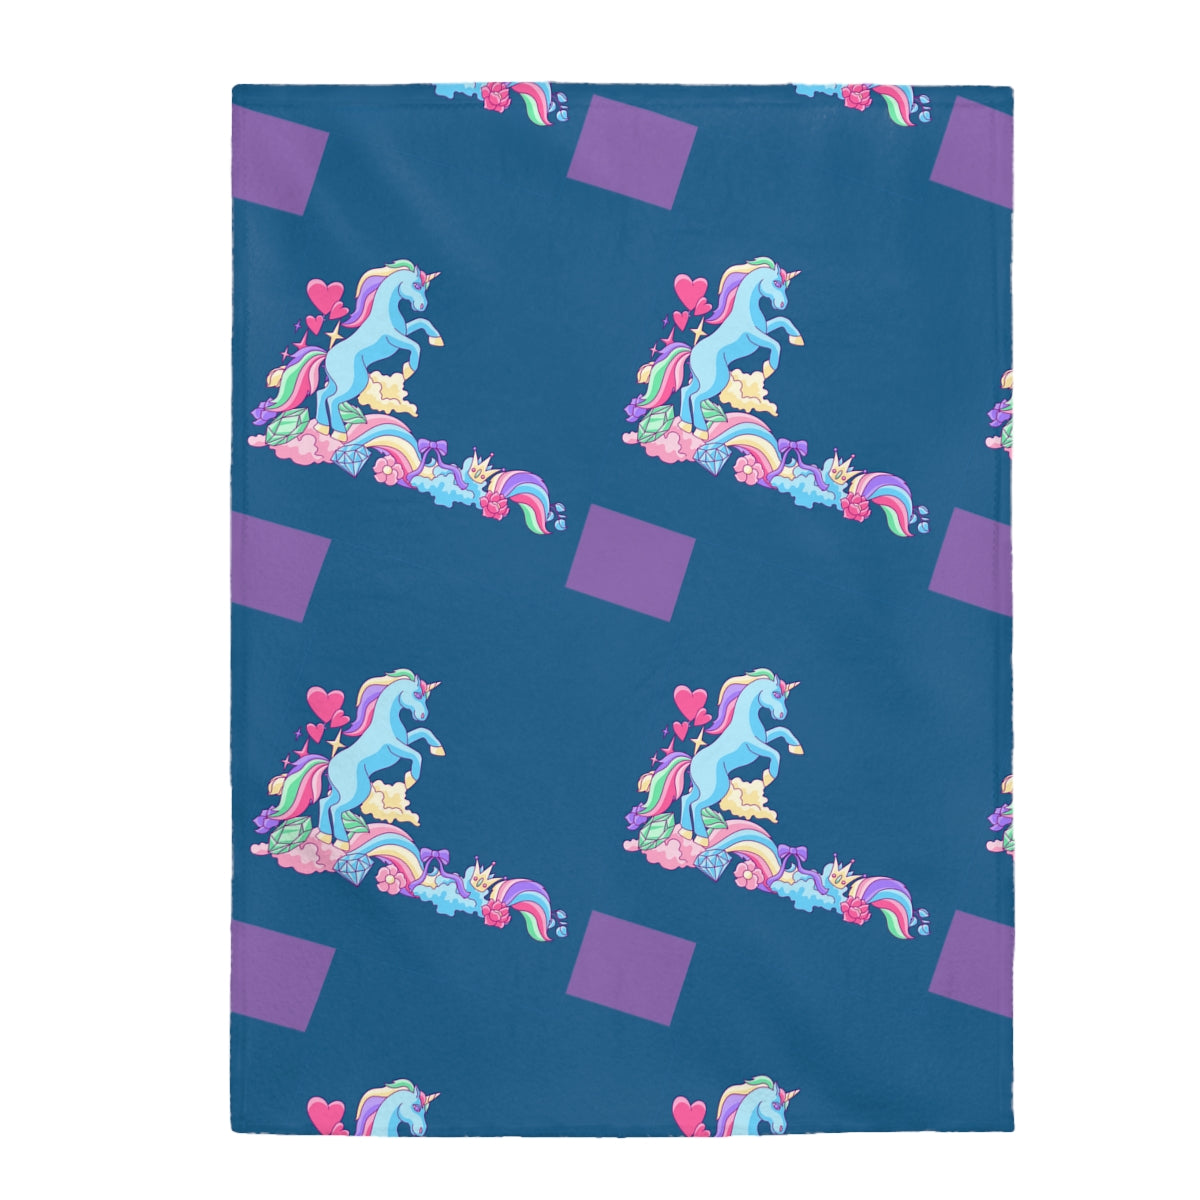 Kids Blankets Personalised, Unicorn Theme Throw Blanket, Plush Super Soft Cozy Throw Blankets 3 Sizes